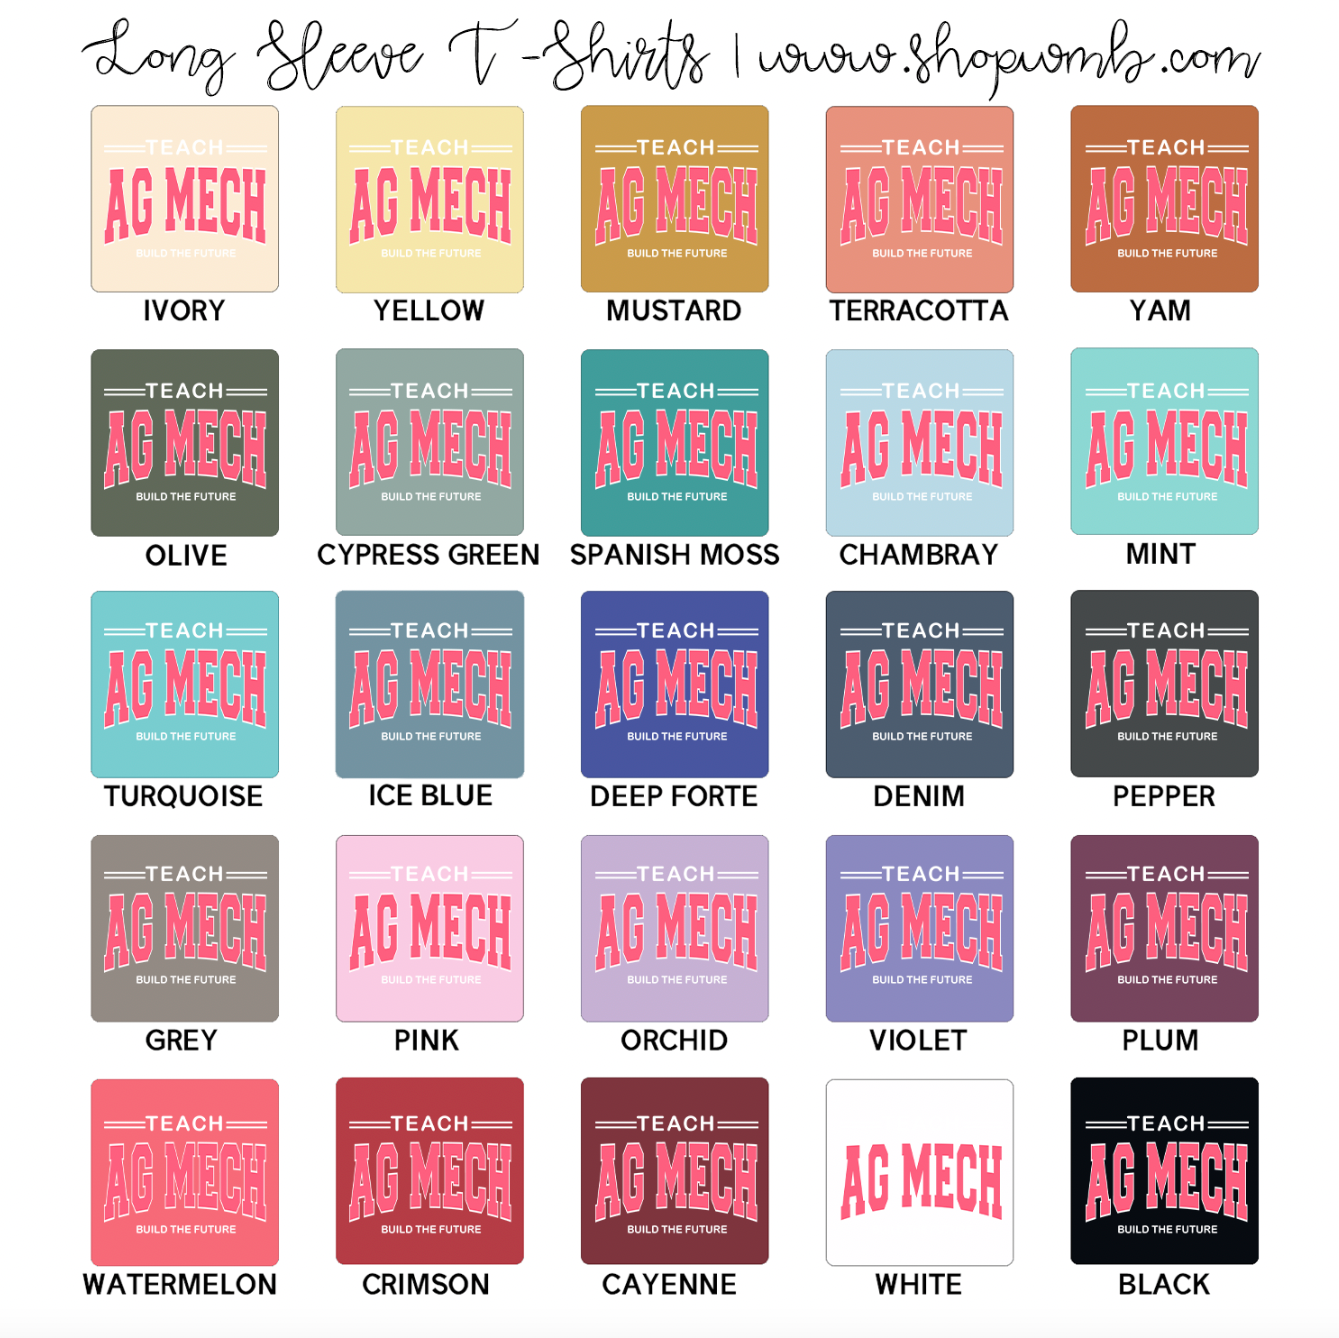 Teach Ag Mech Build The Future Pink LONG SLEEVE T-Shirt (S-3XL) - Multiple Colors!